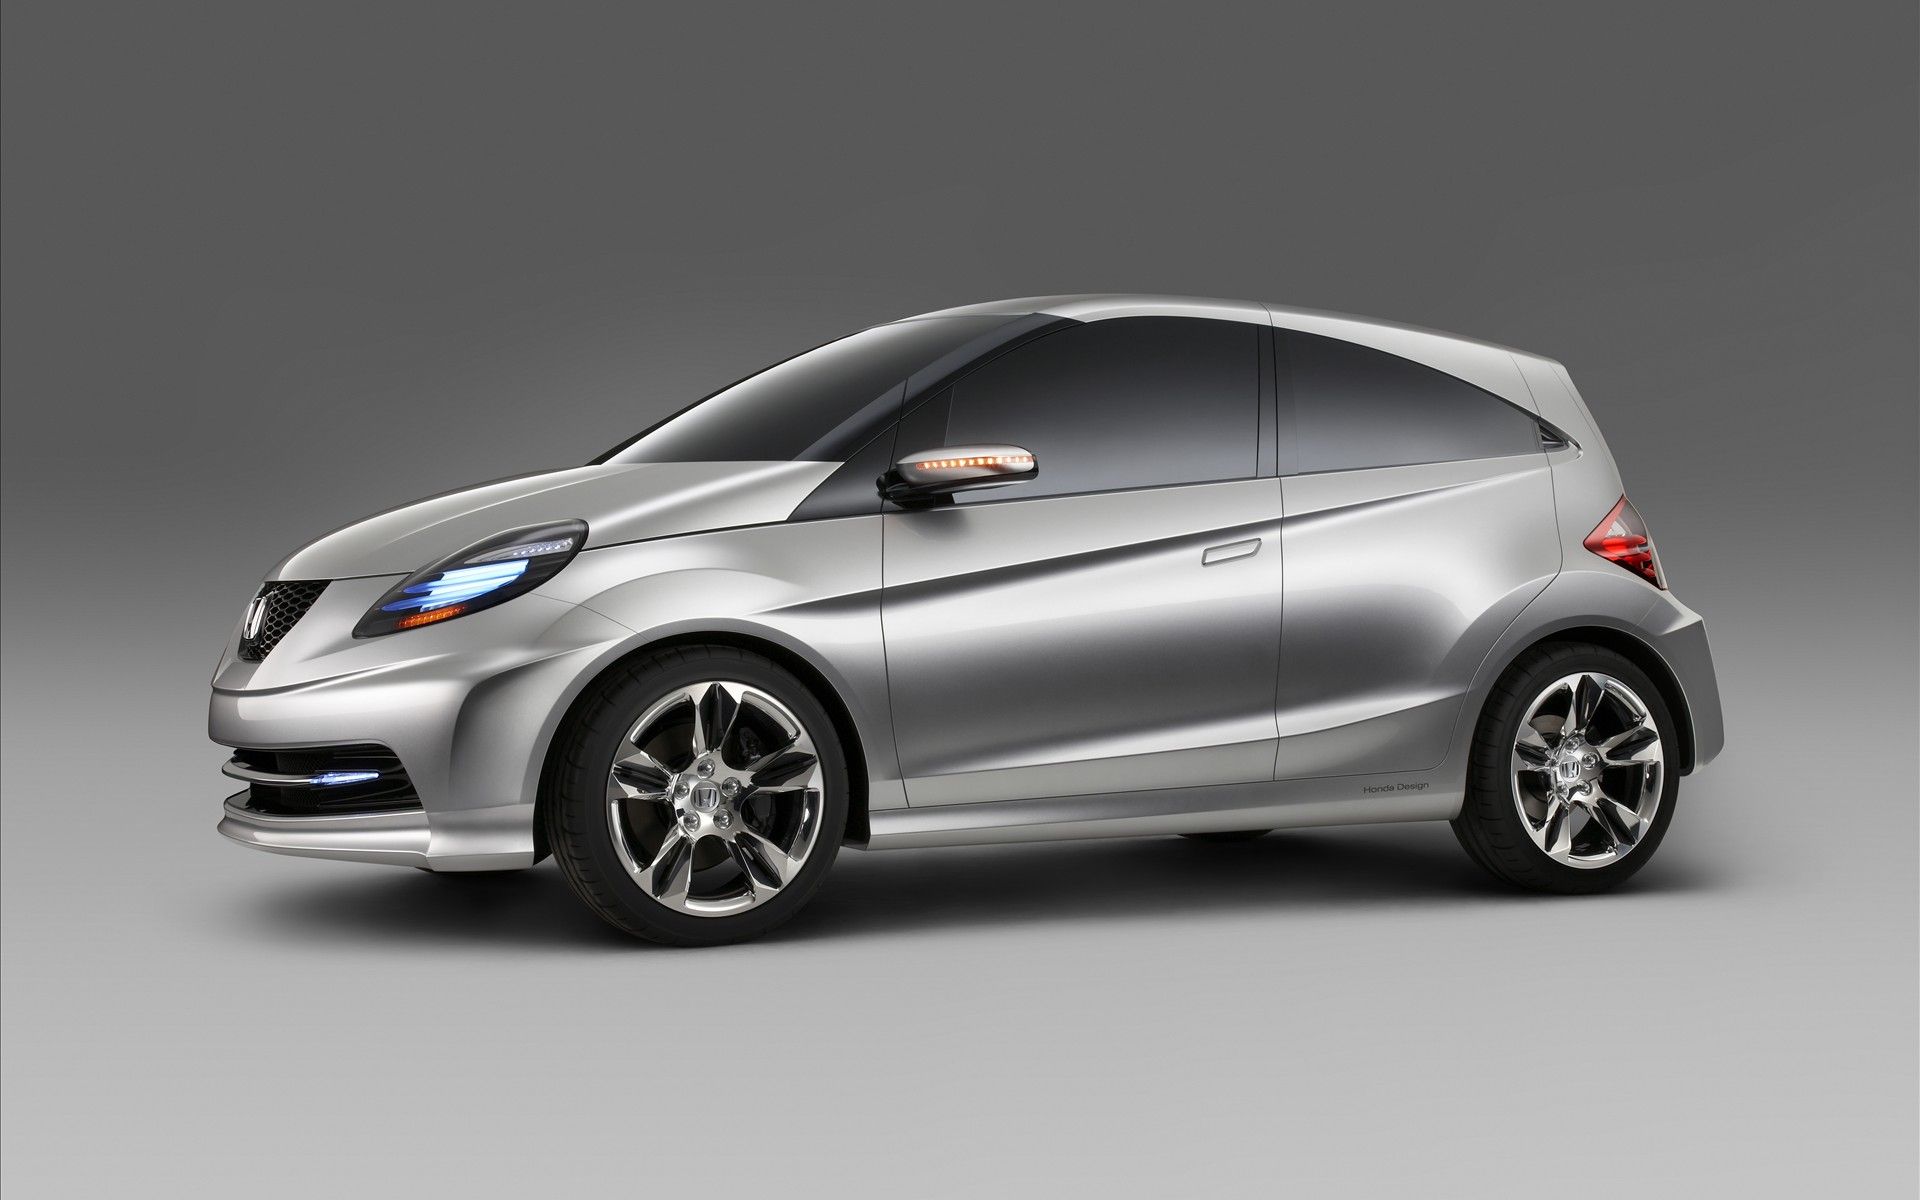 Honda Small Car Concept: free desktop wallpaper and background image